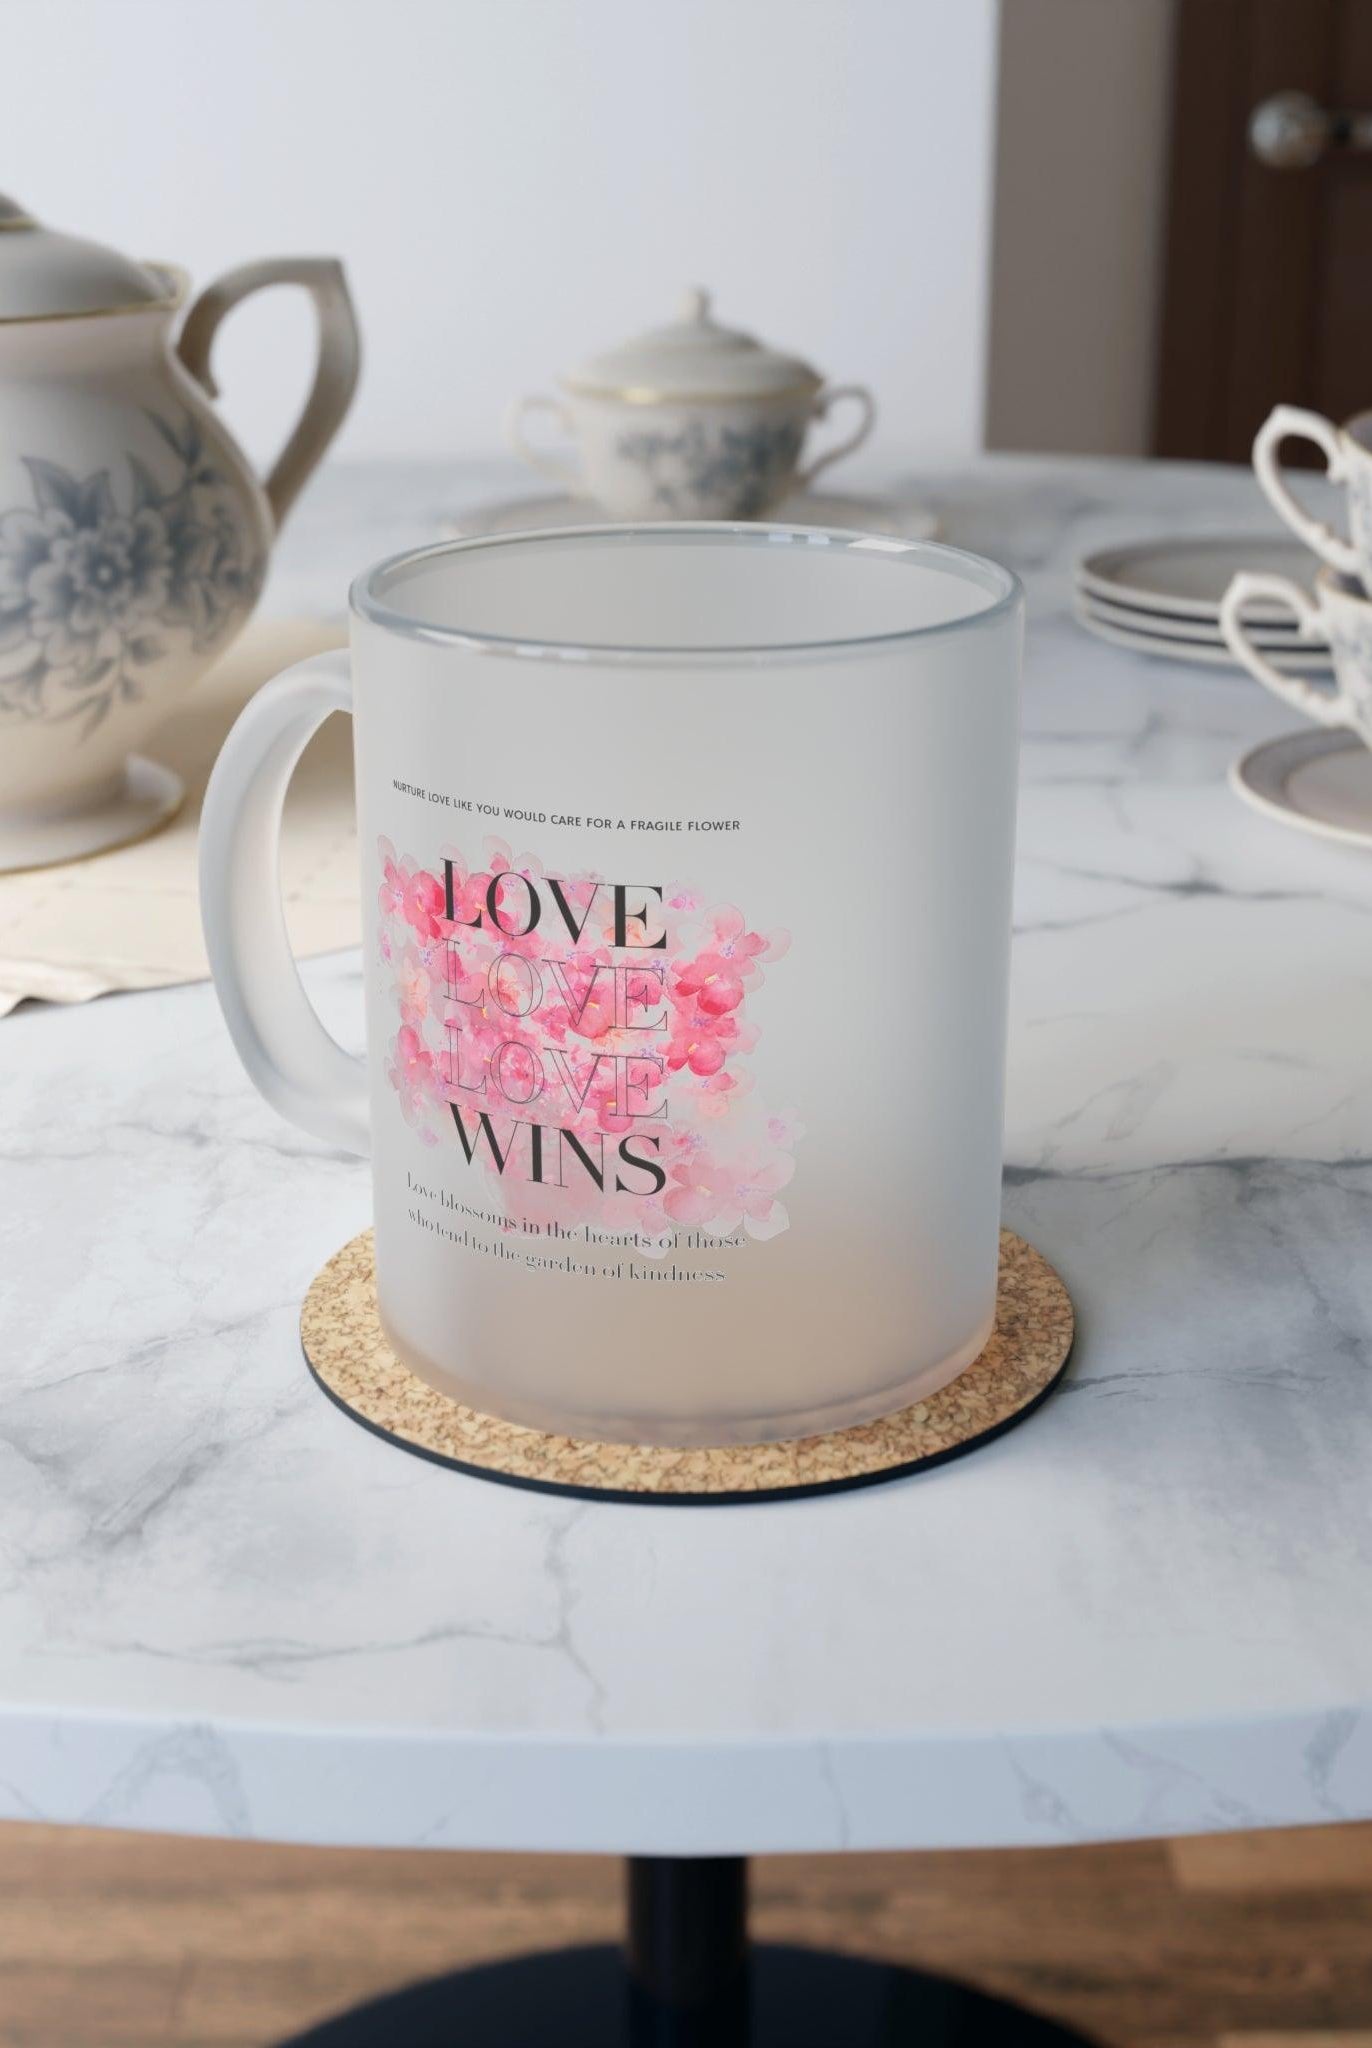 Love Love Love Wins - Frosted Glass Mug - Soulshinecreators - 11 oz